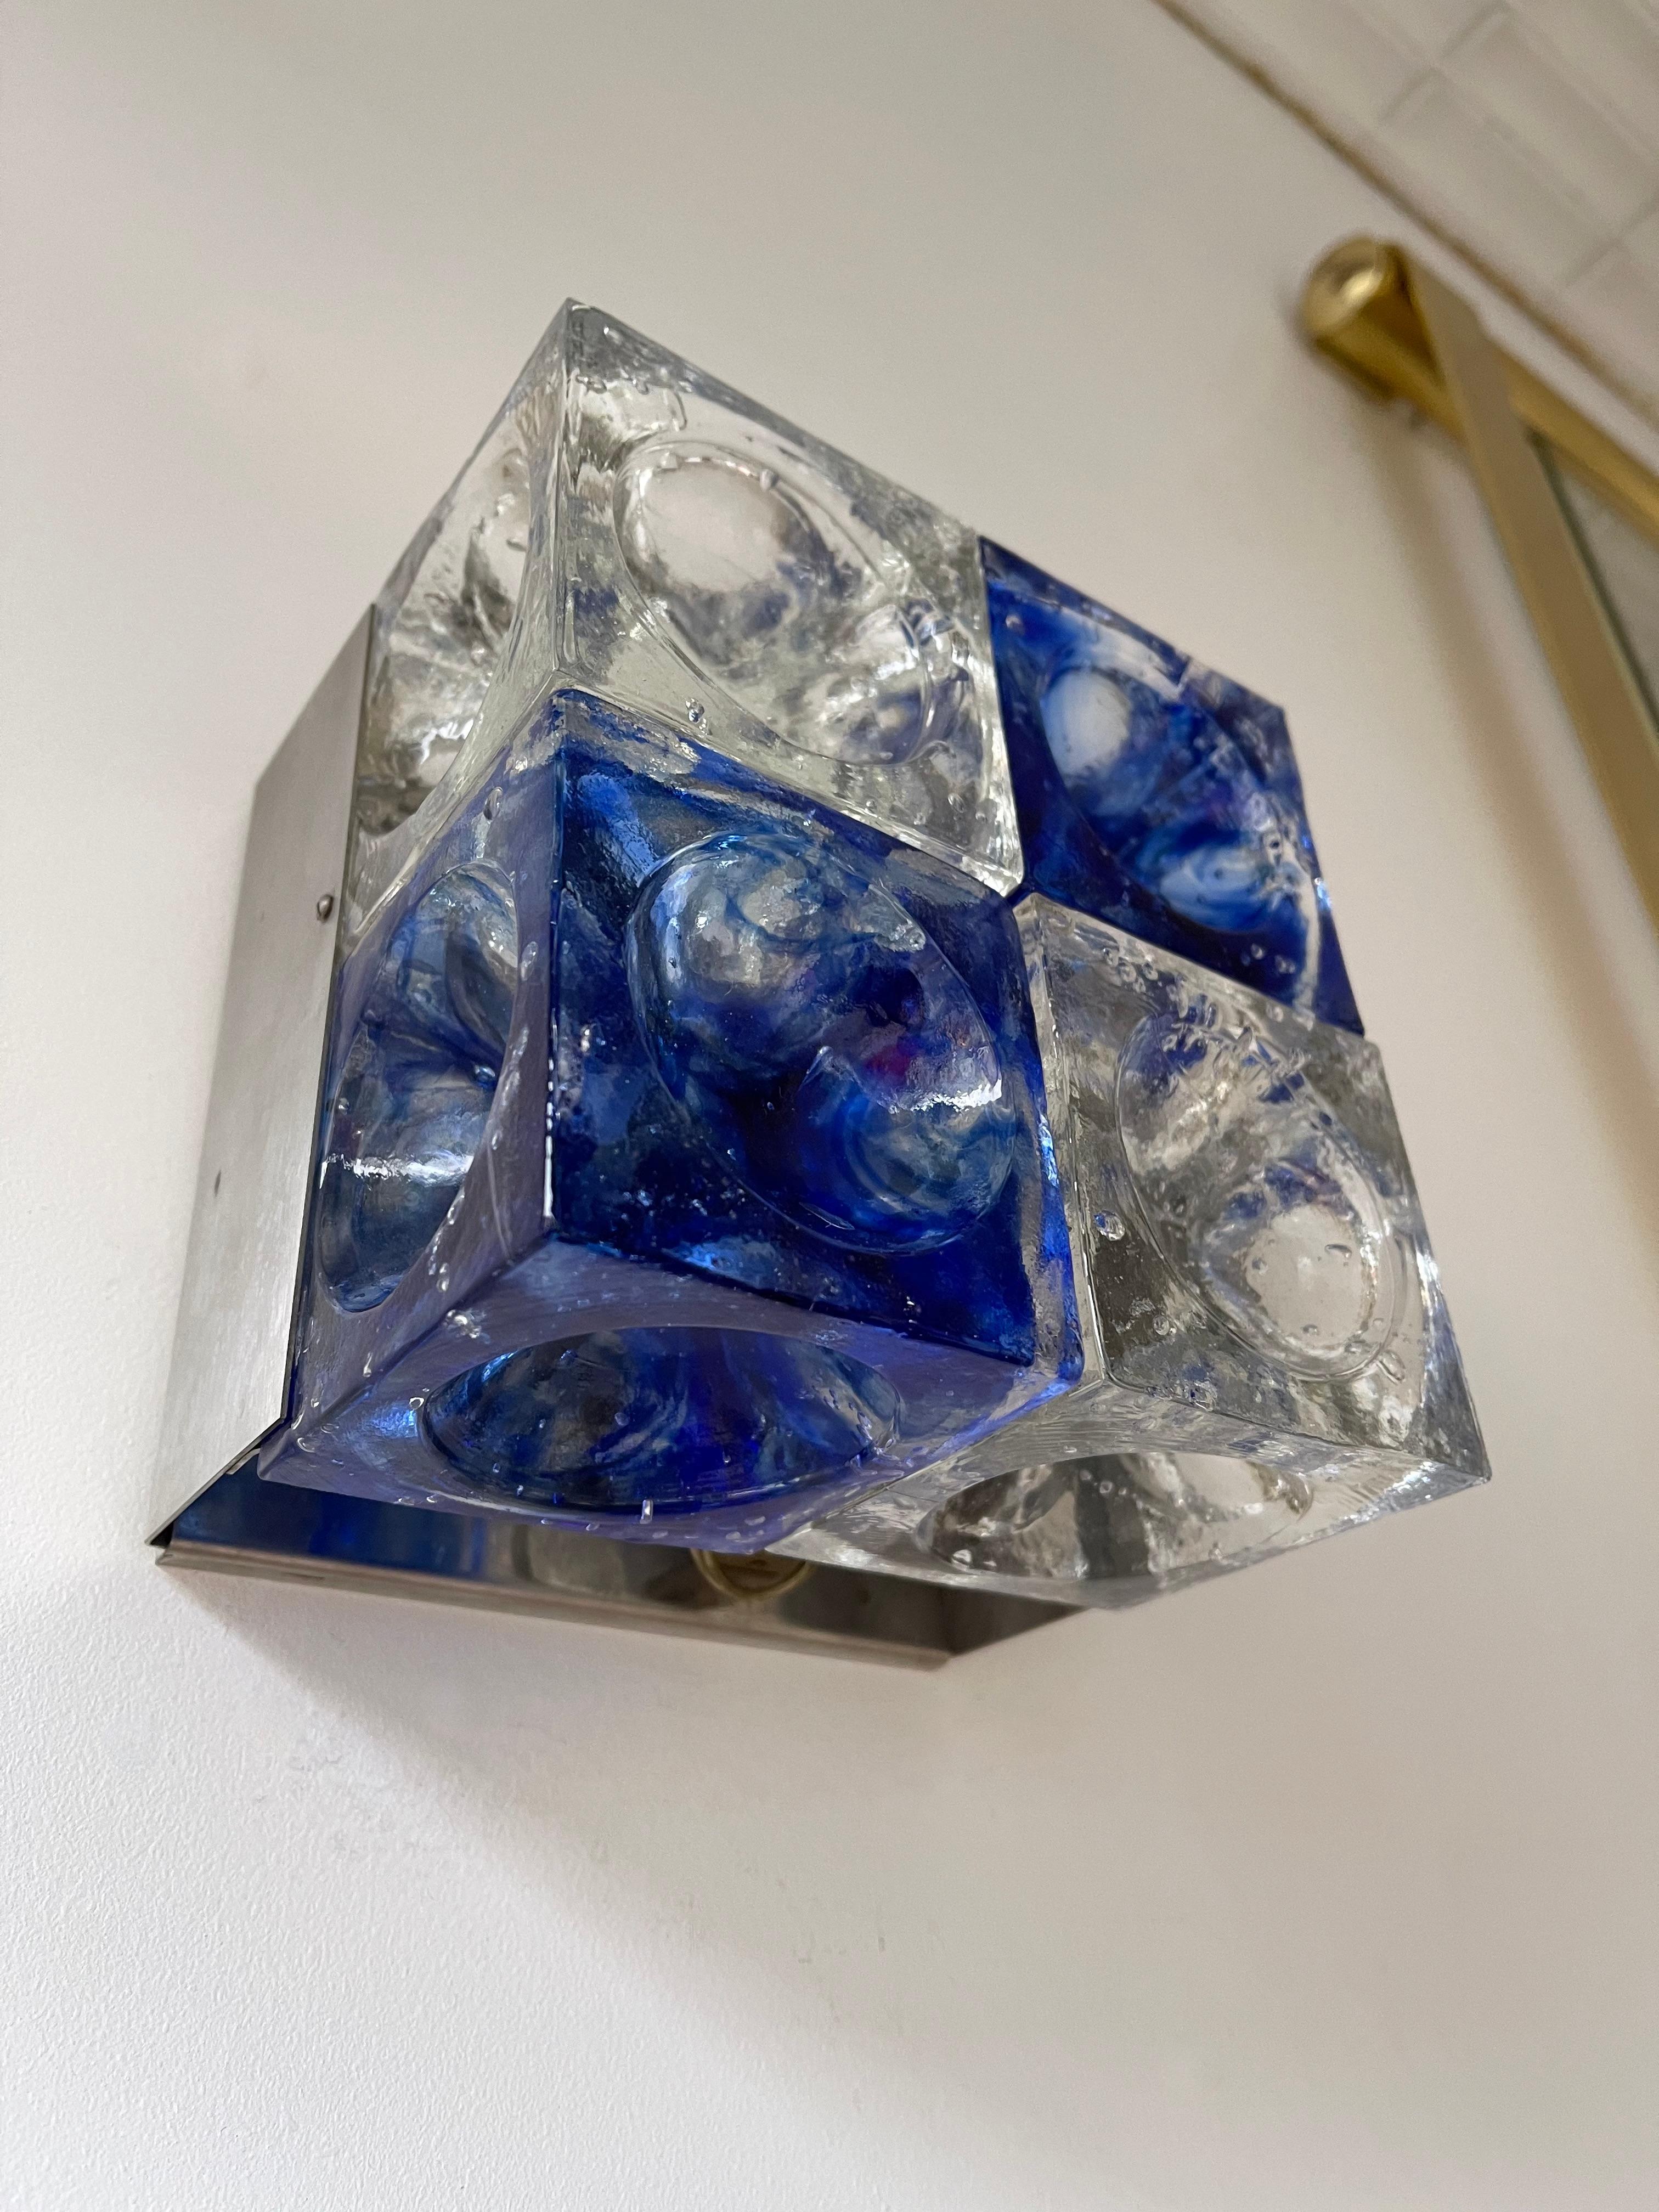 Rare pair of wall lights lamps sconces blue and clear glass cube, stainless steel structrure by Poliarte. Famous design like Mazzega Murano, Venini, Vistosi, La Murrina, Aldo Carlo Nason.